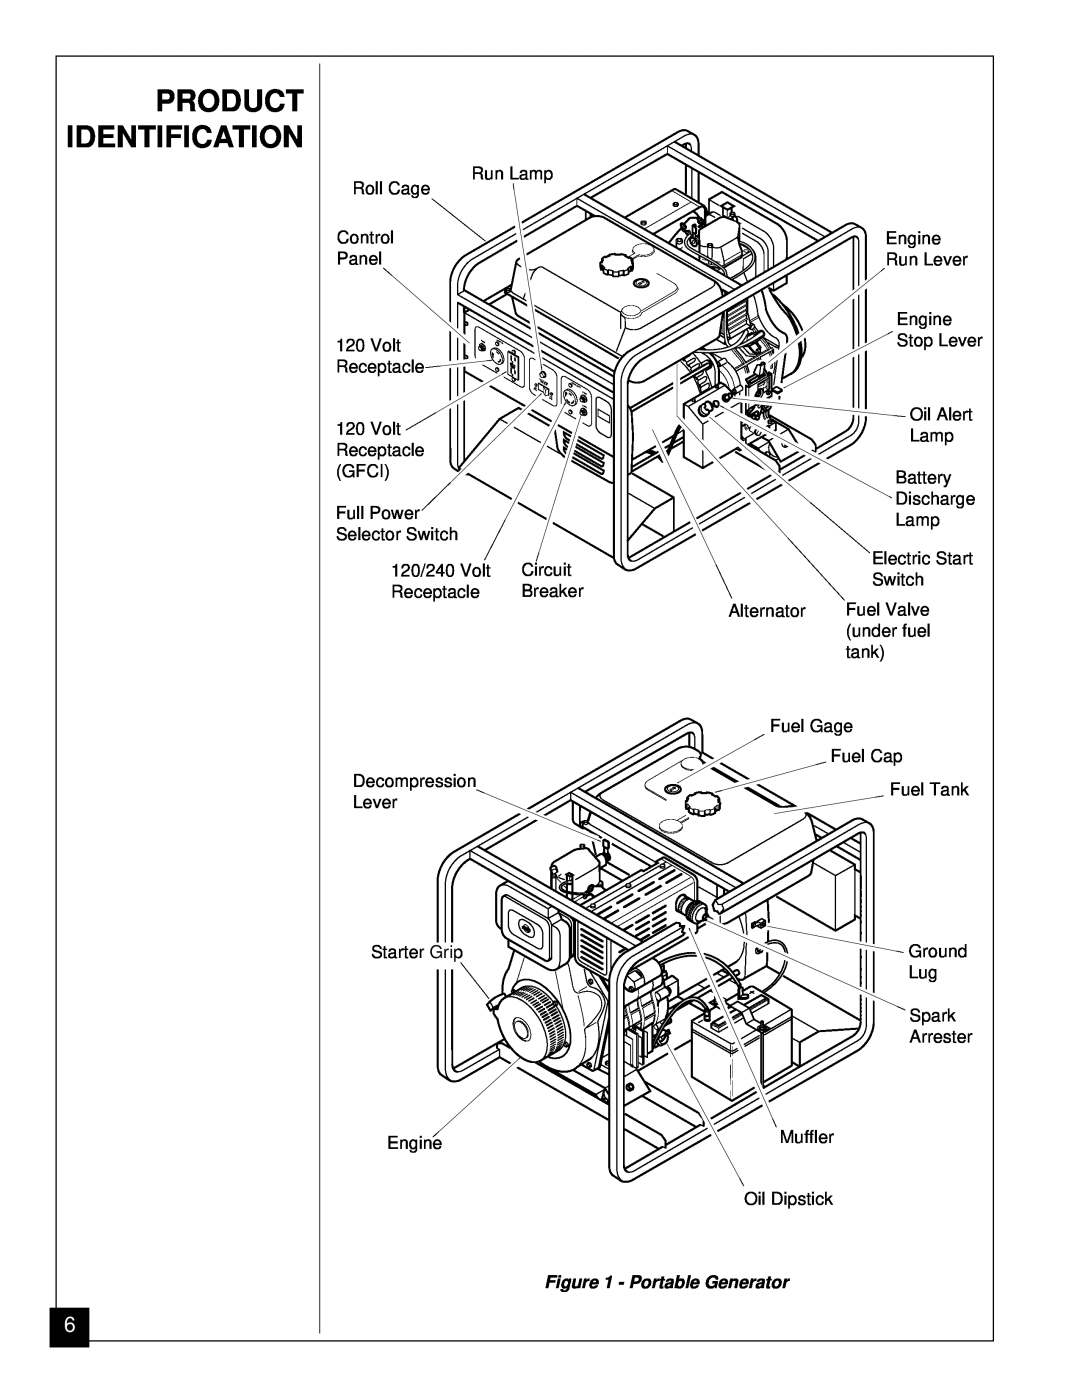 Master Lock MGY5000 installation manual Product Identification, Portable Generator 